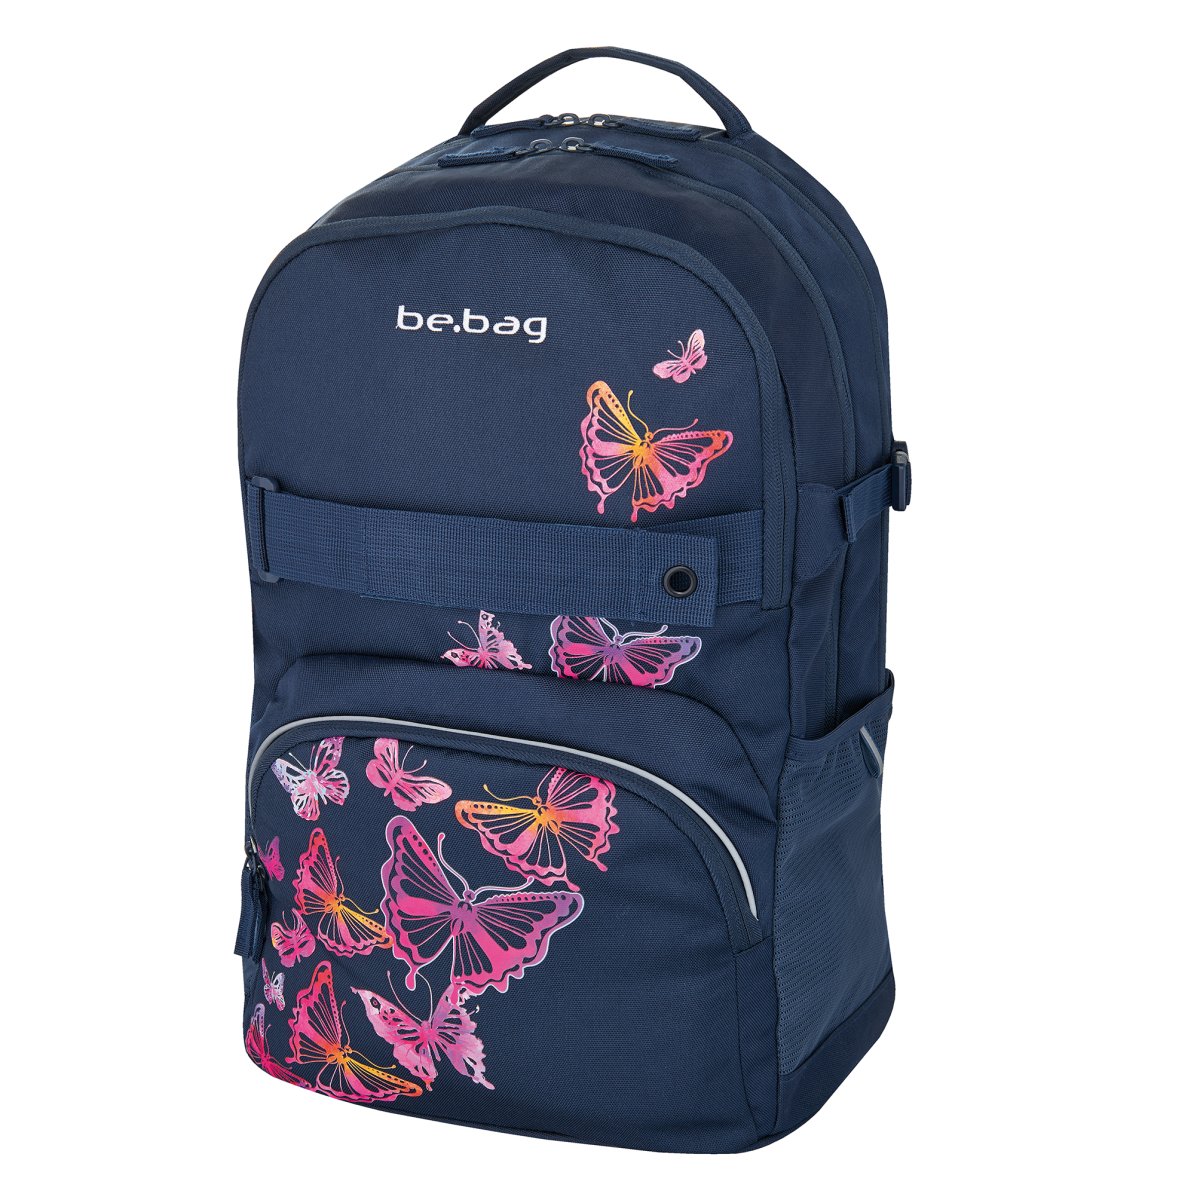 fox Bitterness Road making process school backpack be.bag cube Butterfly - Herlitz